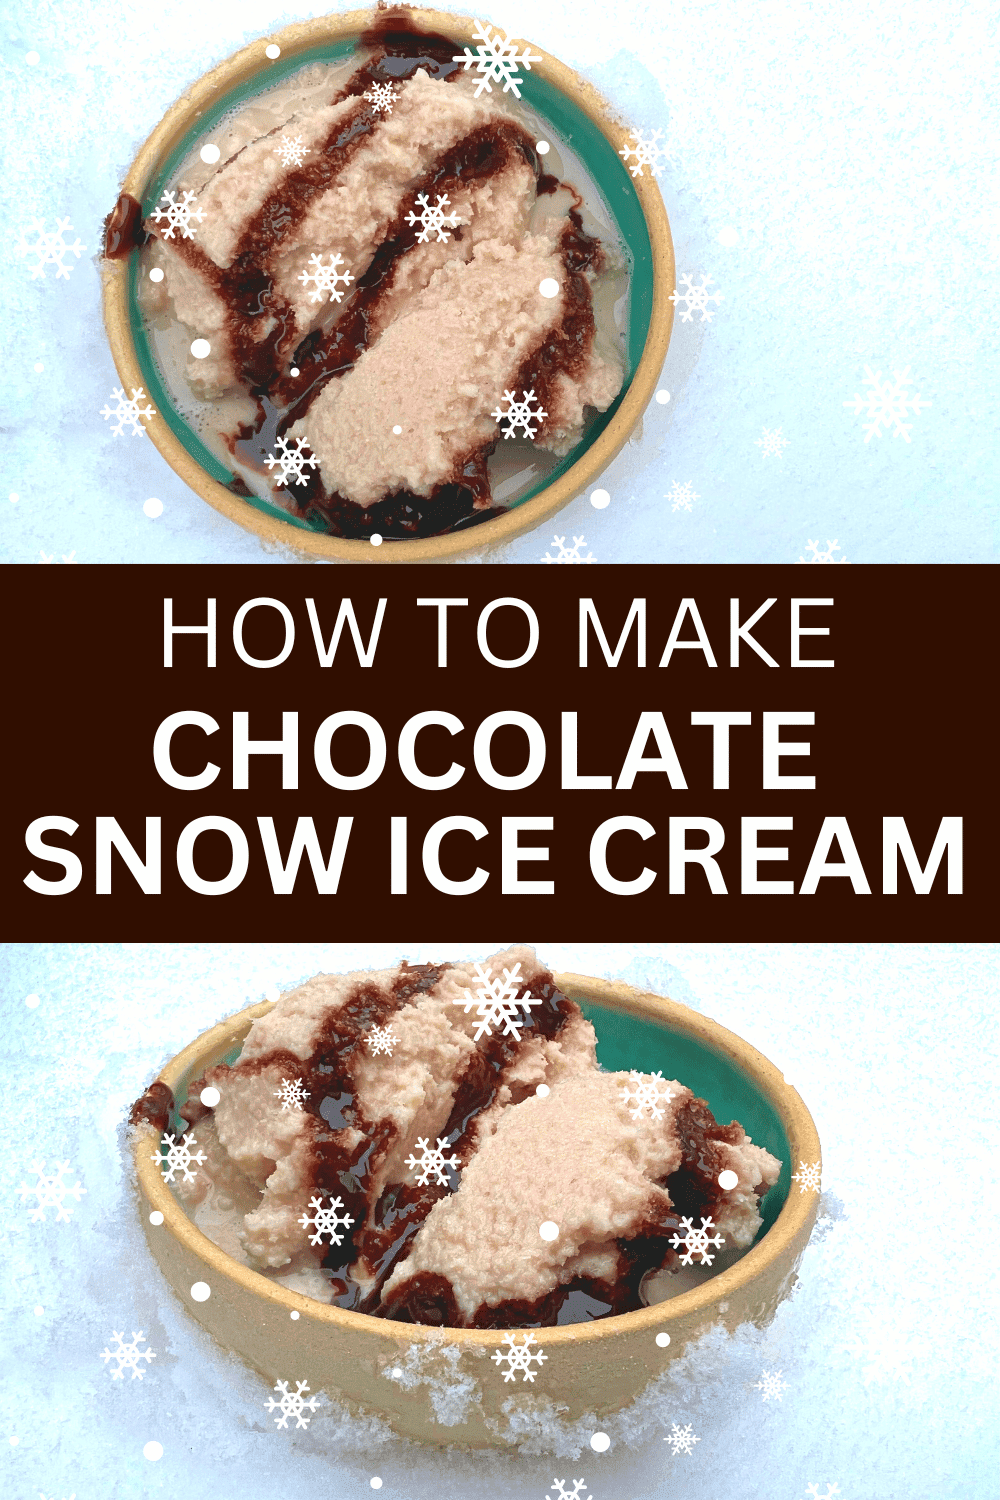 Homemade Chocolate Snow Cream (how to make snow cream ice cream chocolate flavor) text over images of chocolate snow ice cream sitting in white snow